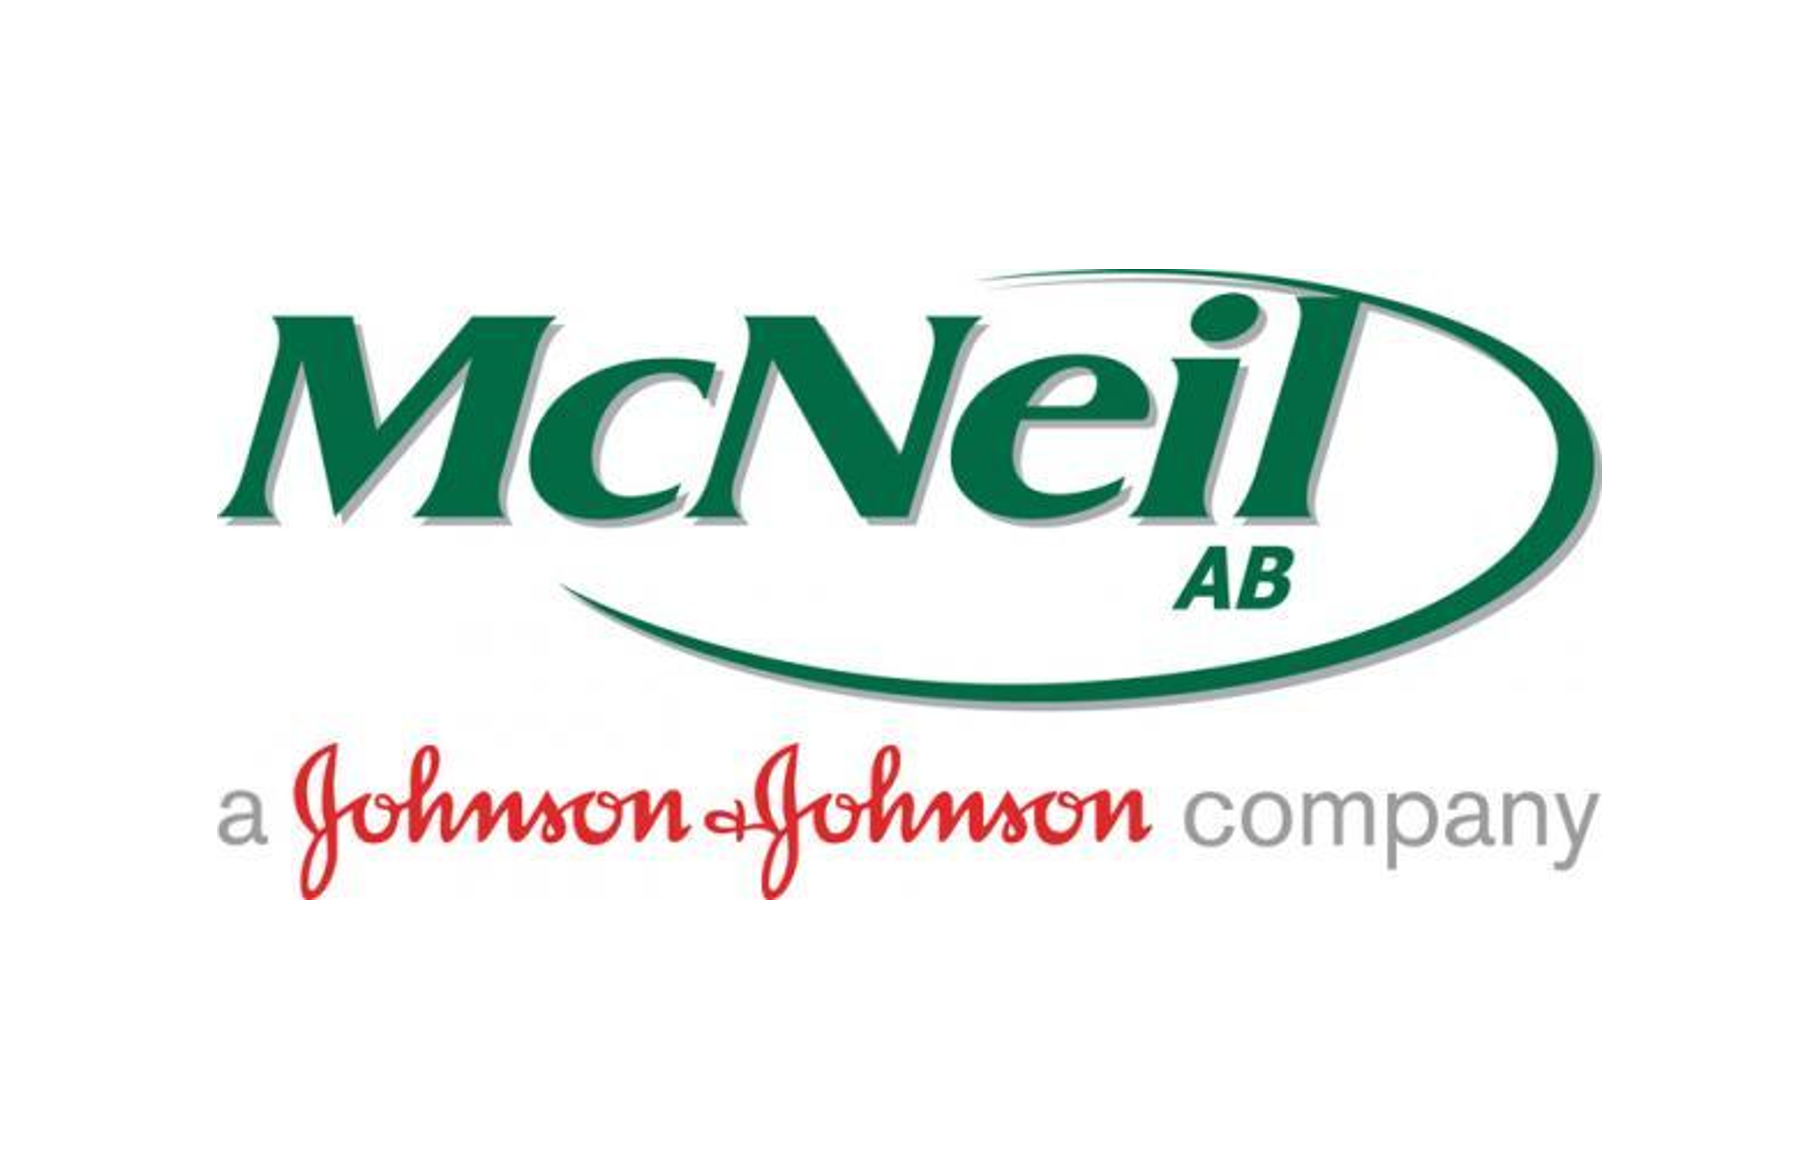 McNeil logo